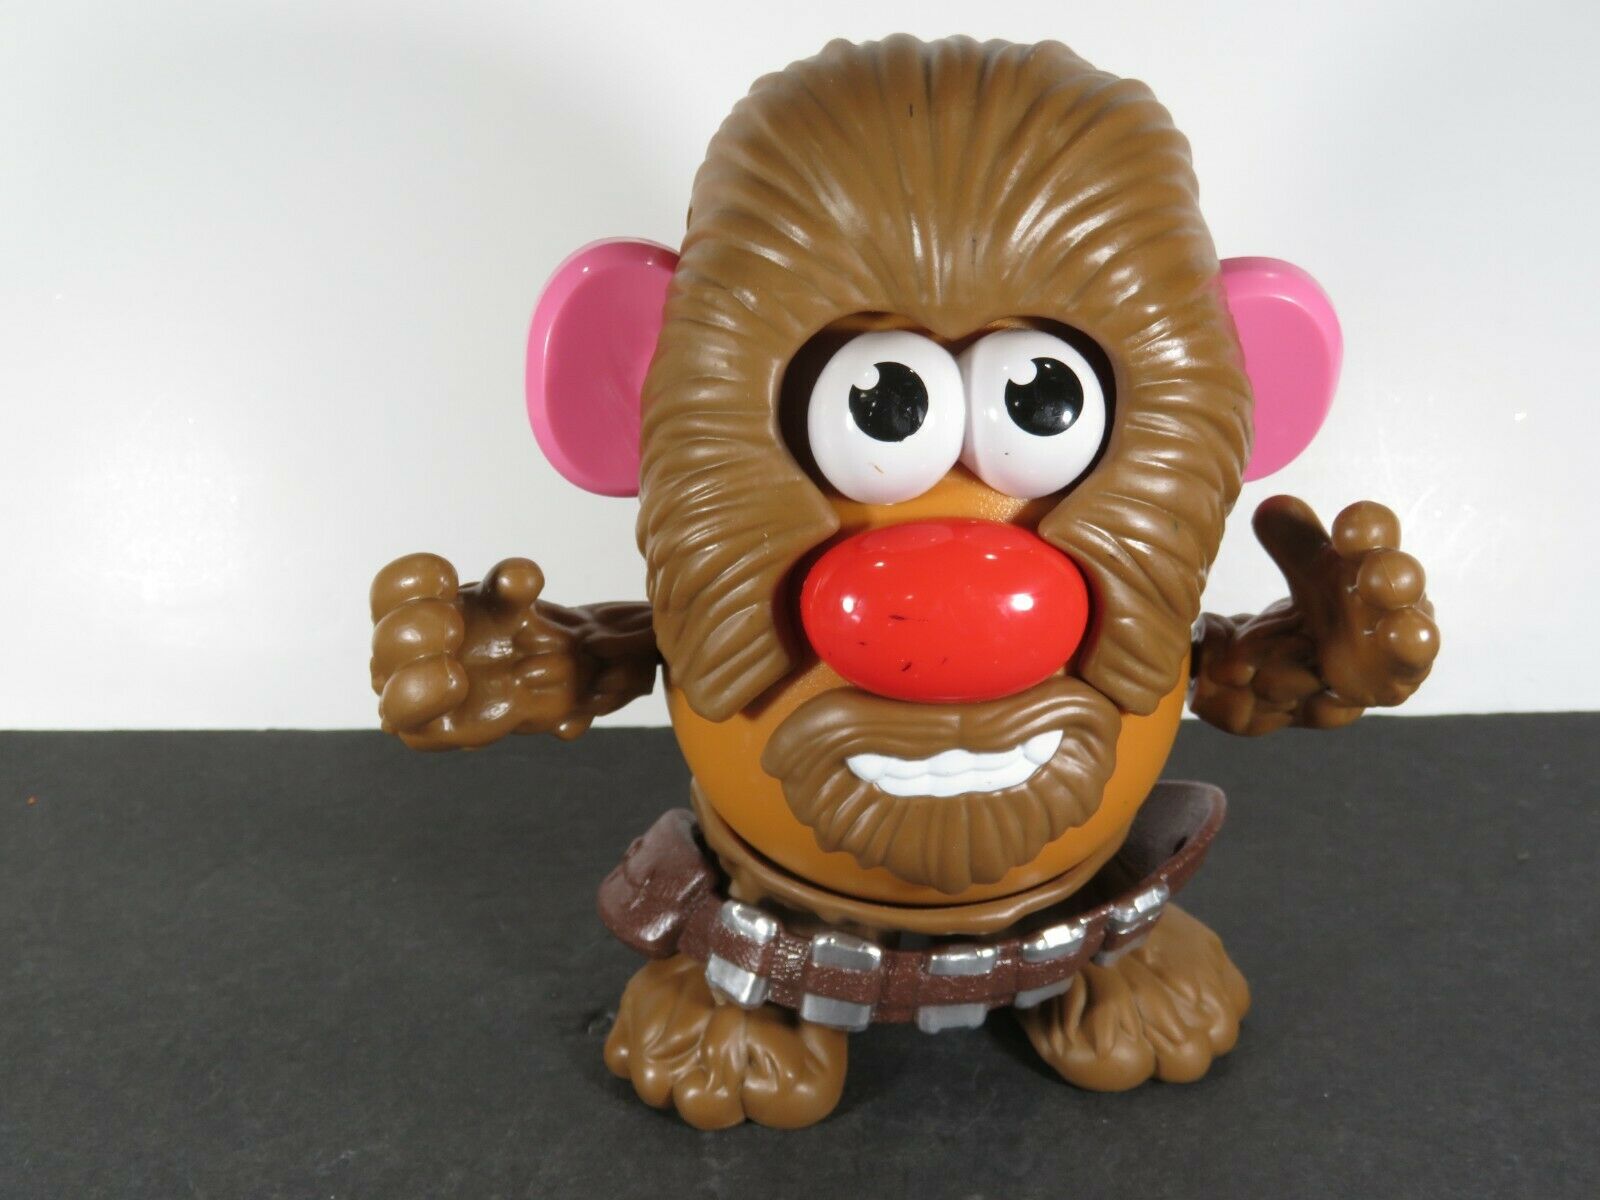 Playskool Friends Disney Star Wars Mr. Potato Head Chew-Bake-A Toy B4705